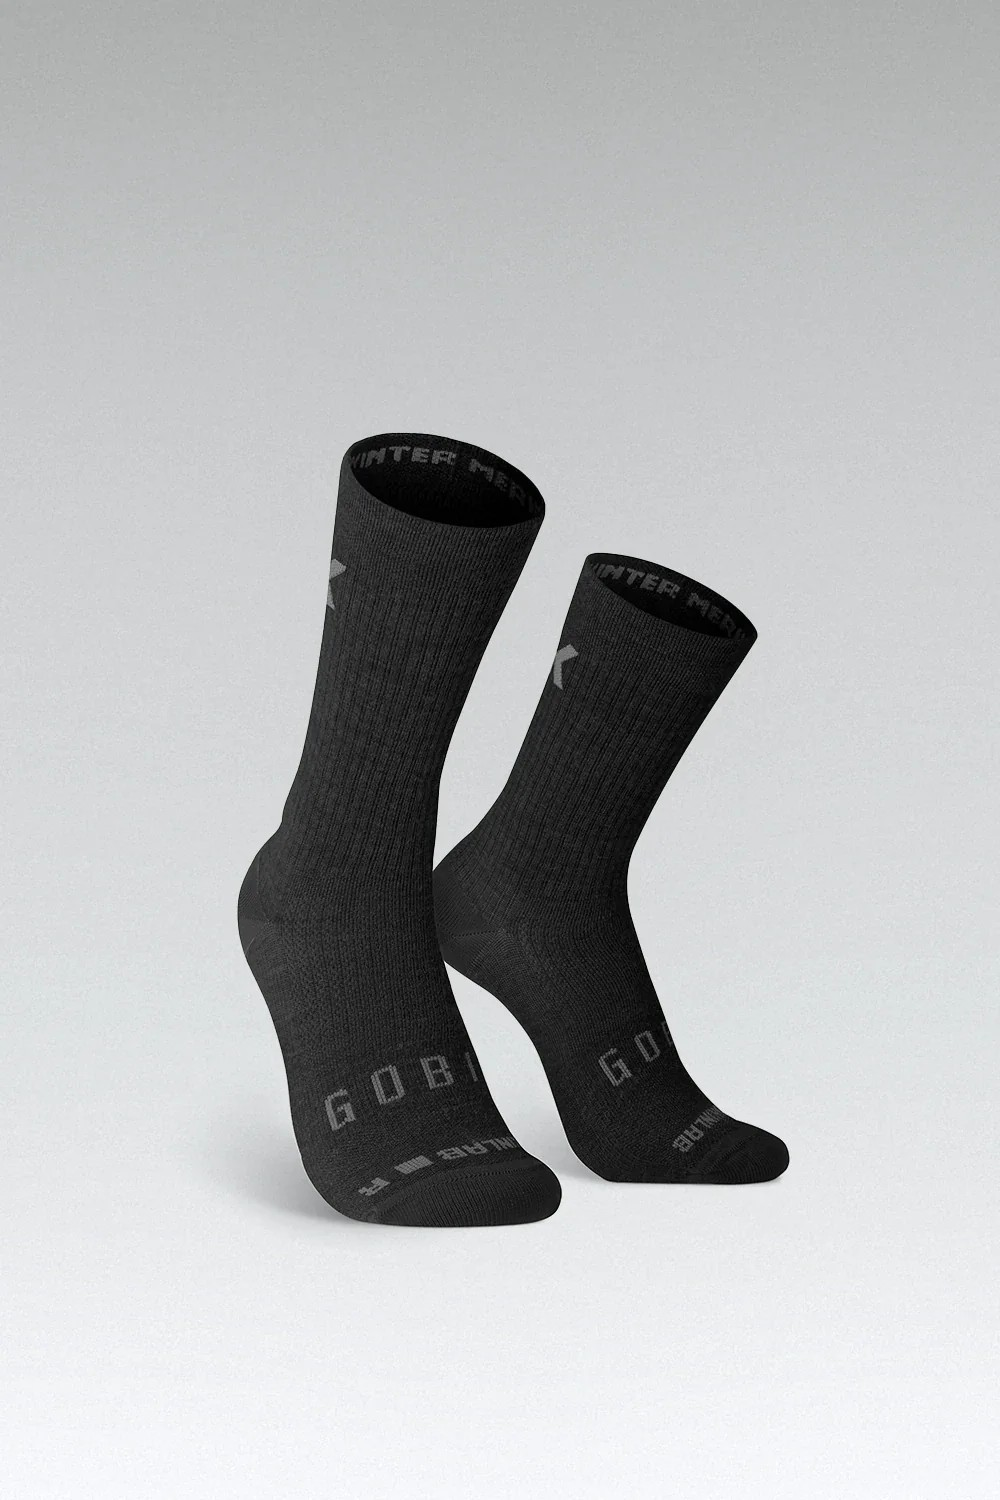 Gobik Winter Merino Socks | Unisex